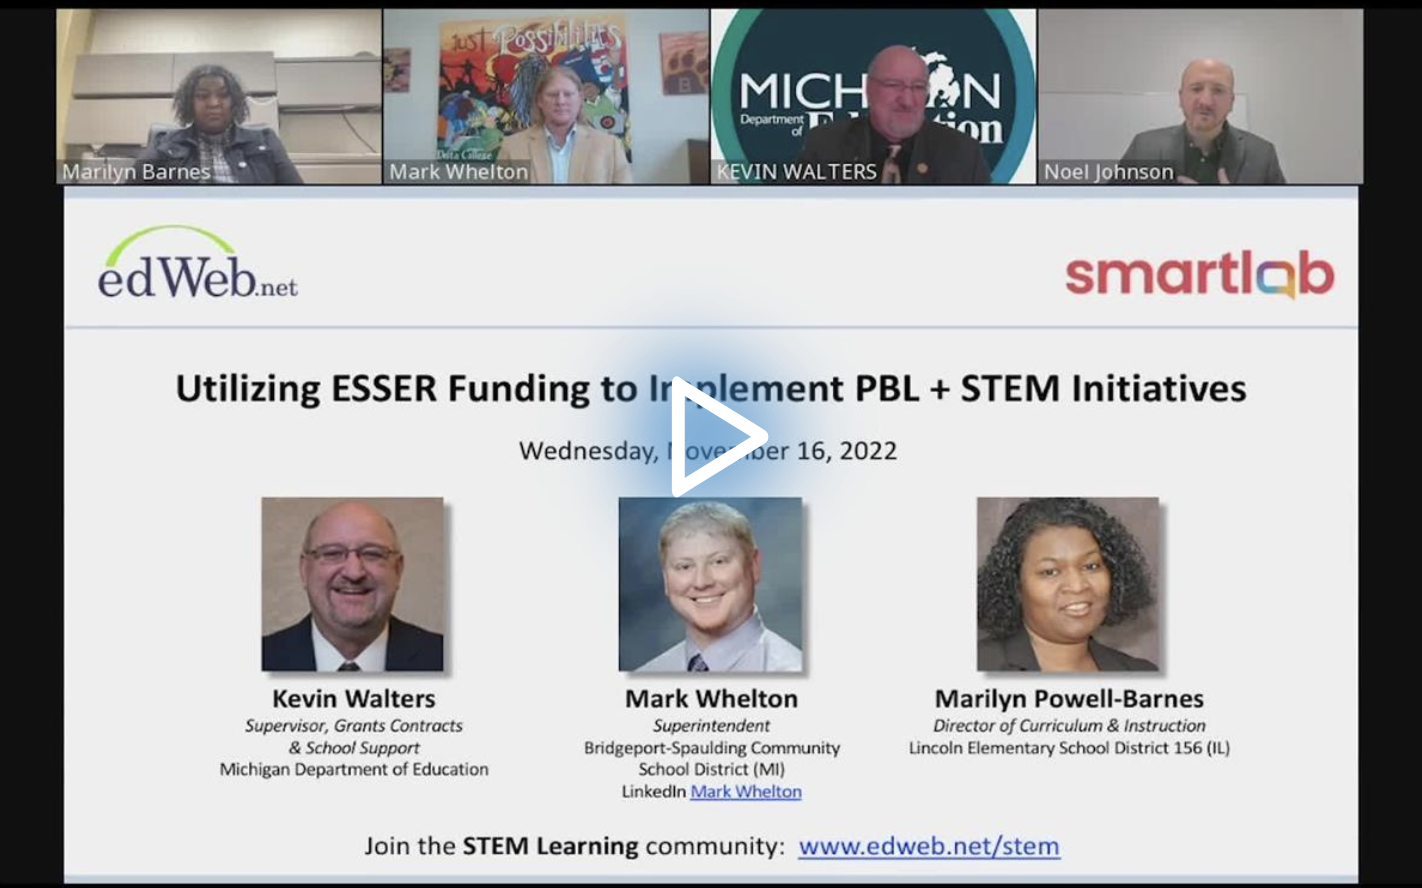 Utilizing ESSER Funding to Implement PBL + STEM Initiatives edLeader Panel recording screenshot